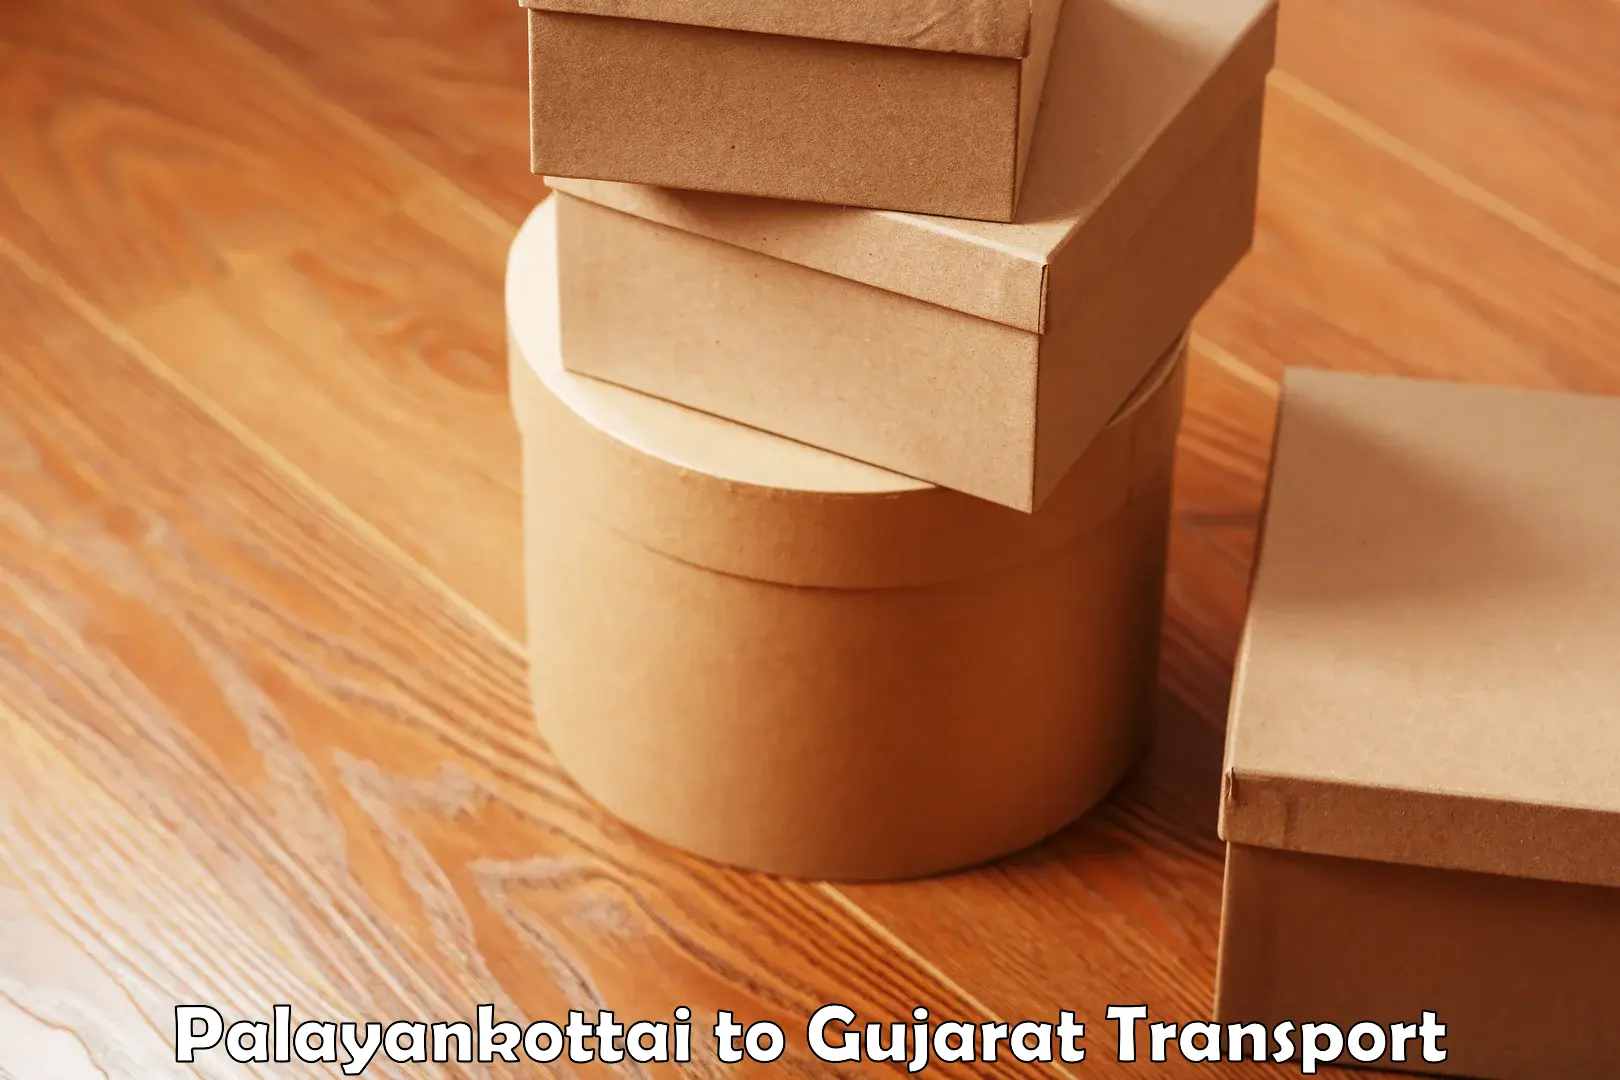 Shipping partner Palayankottai to Gujarat